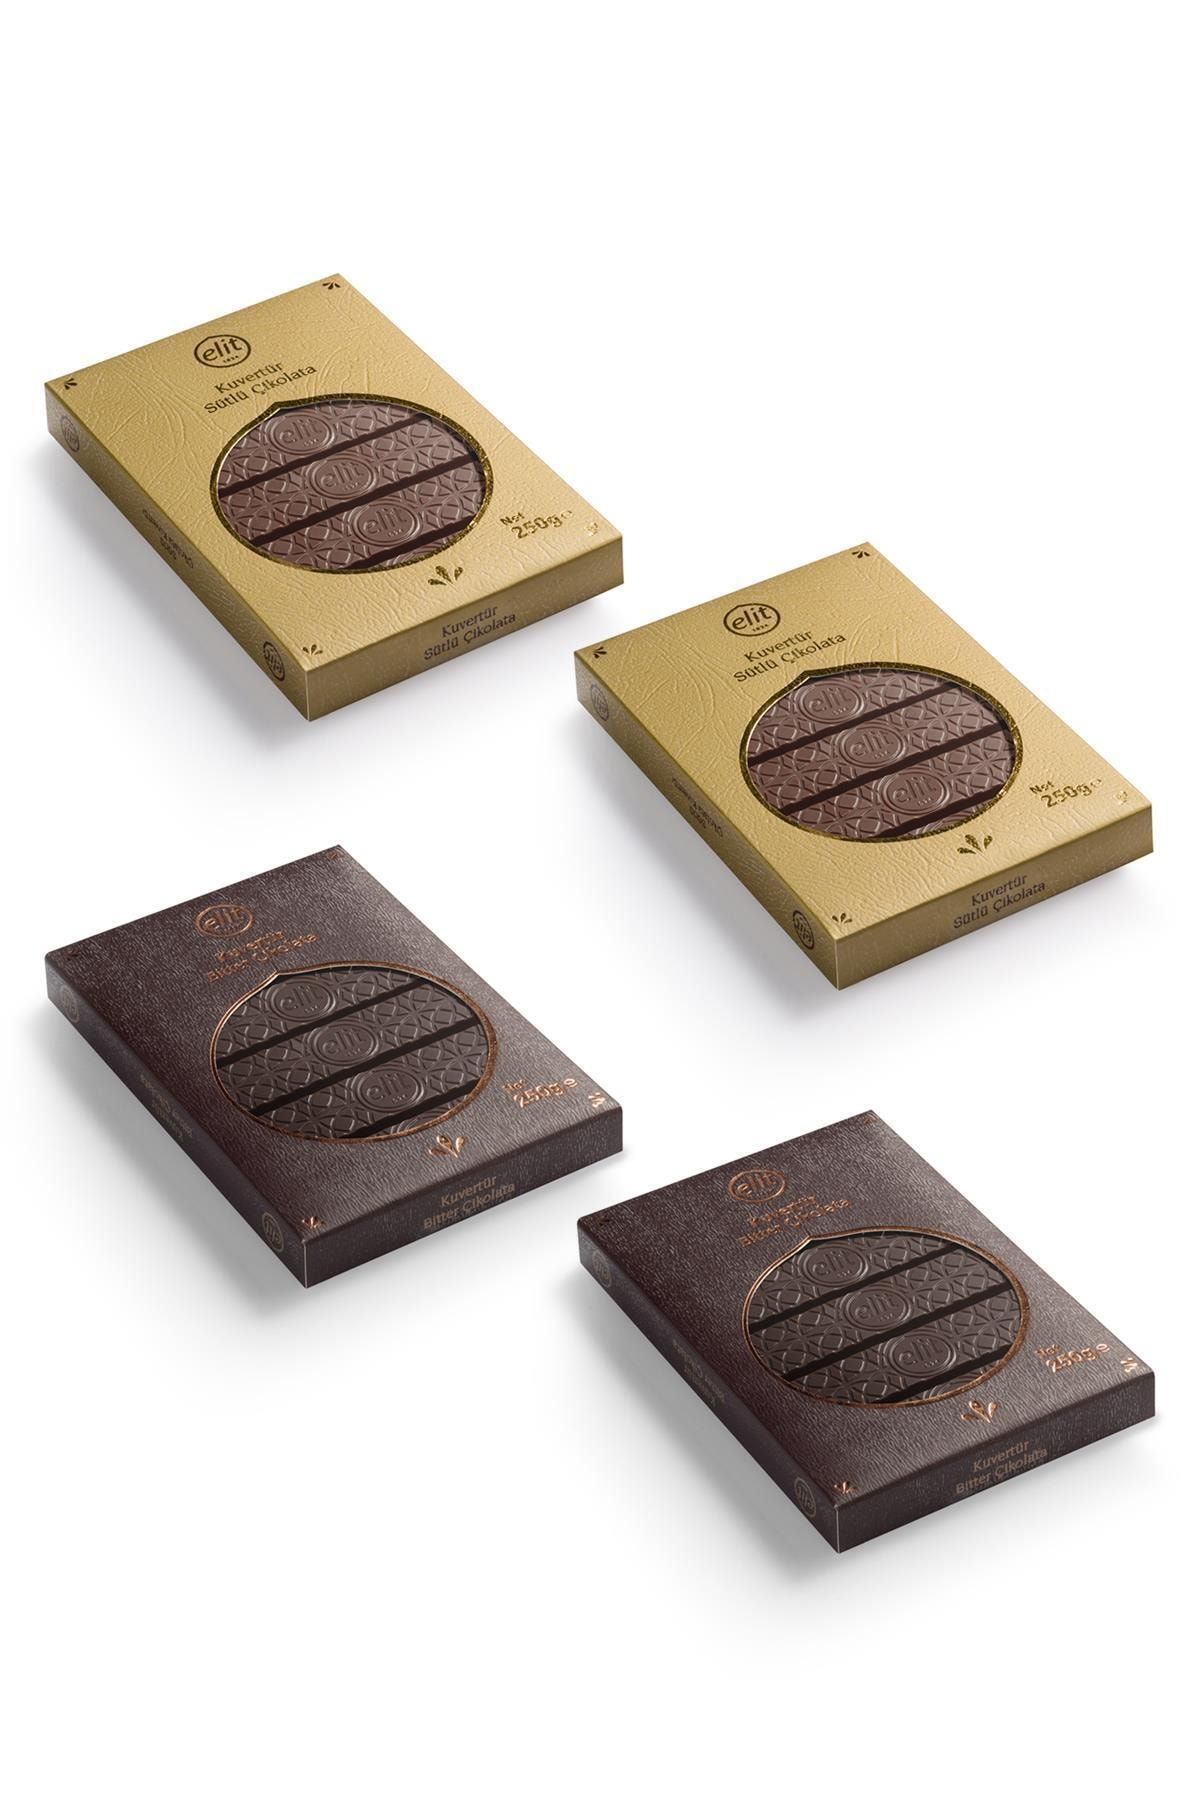 Elit Çikolata Kuvertür Bitter Çikolata (2) Ve Sütlü Çikolata (2) 250g 4'lü Set (4X250G) Glutensiz